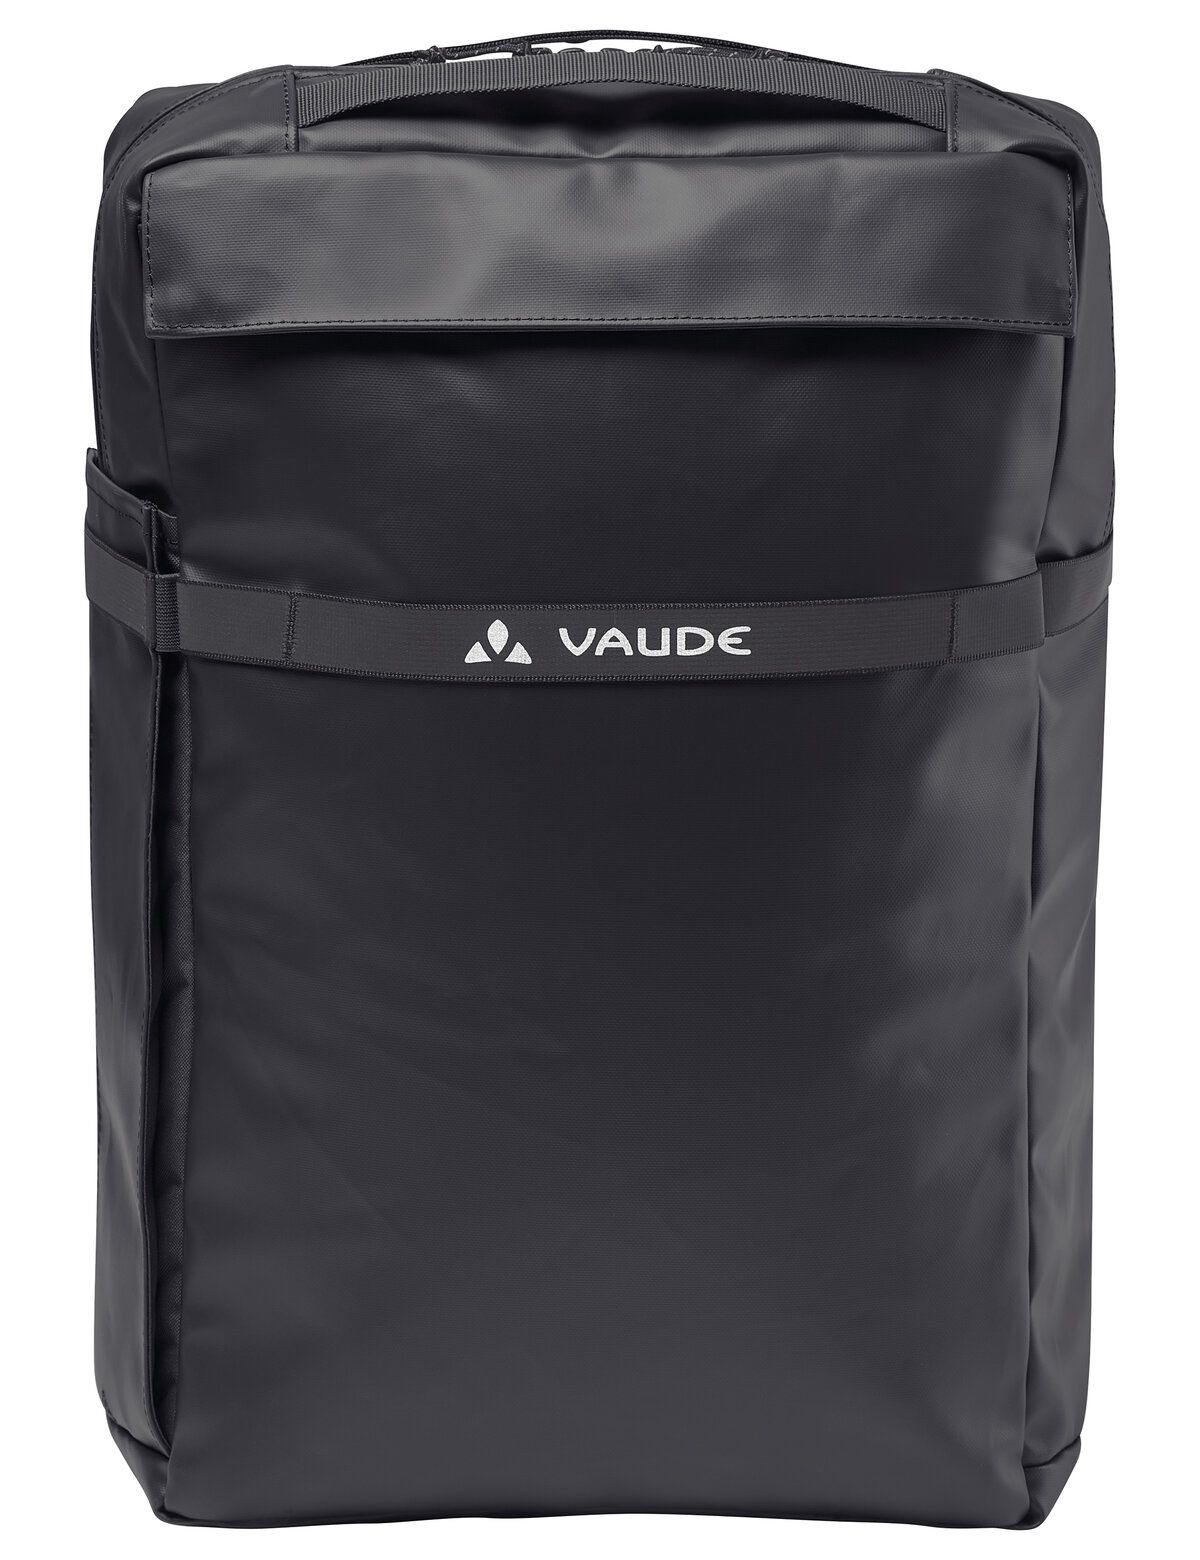 Vaude  Mineo Transformer Backpack 20 - 2in1 Fahrradtaschen-Rucksack - Schwarz (Black)